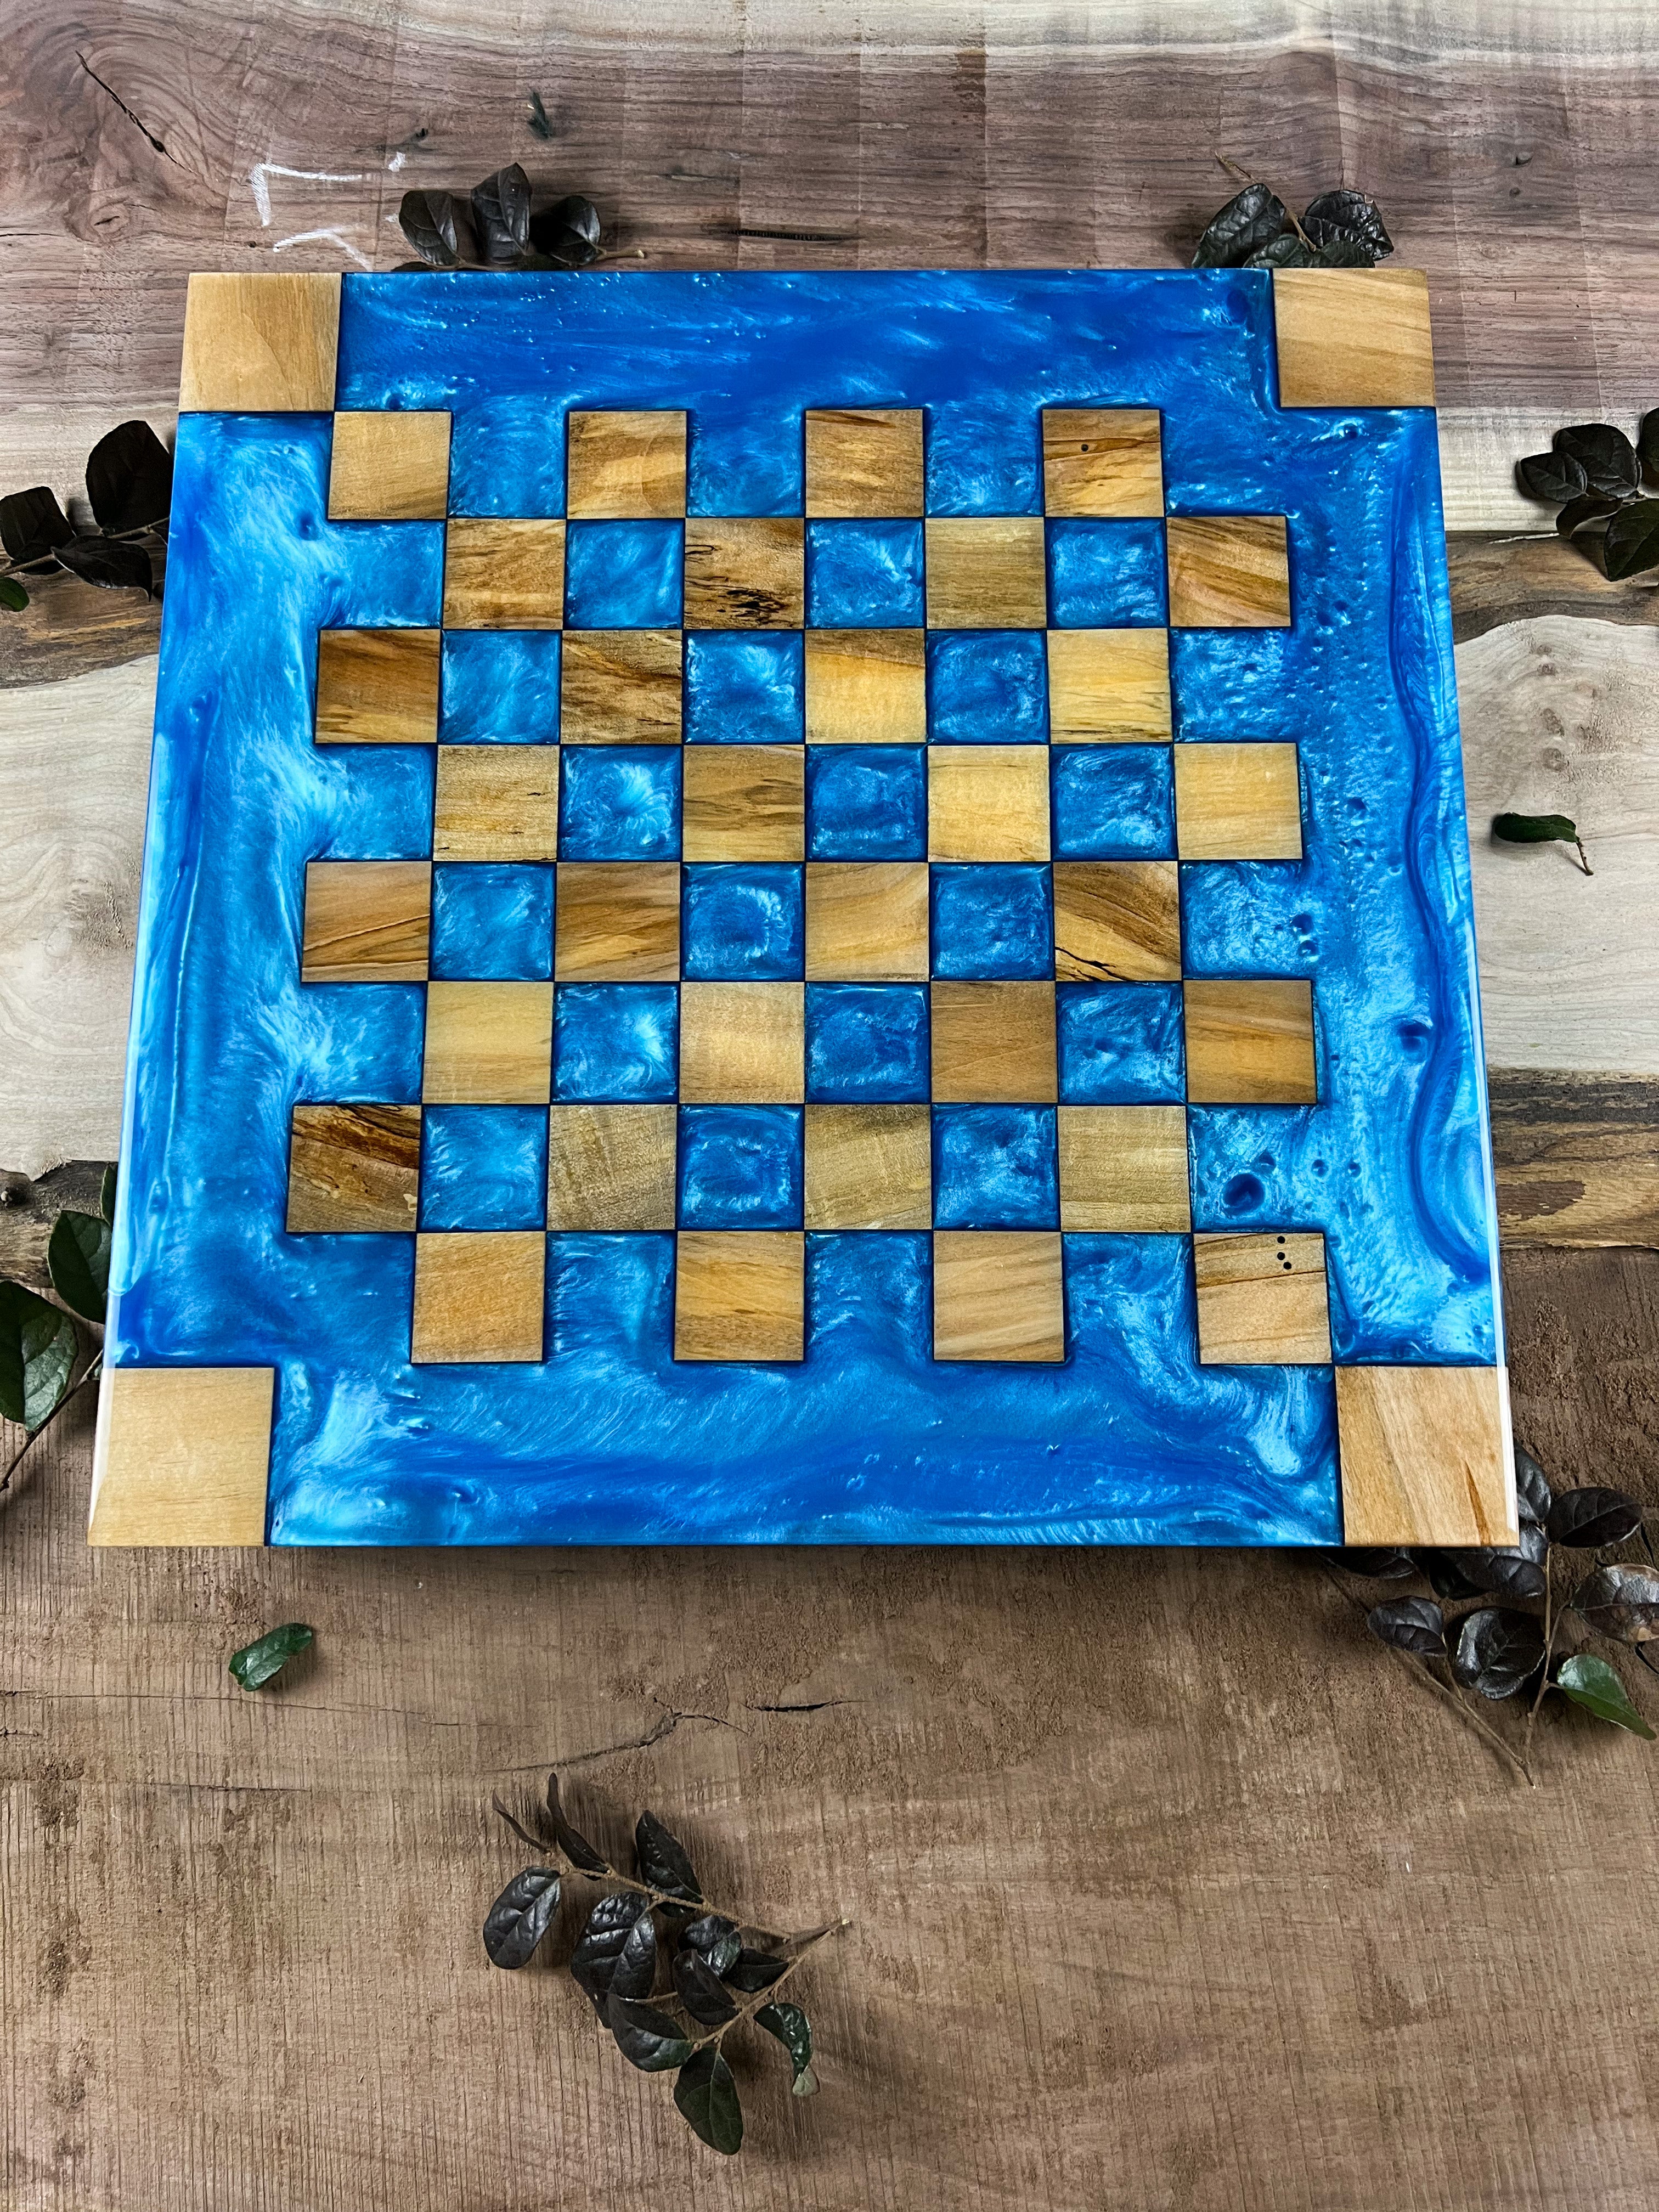 Wood Resin Chess Set